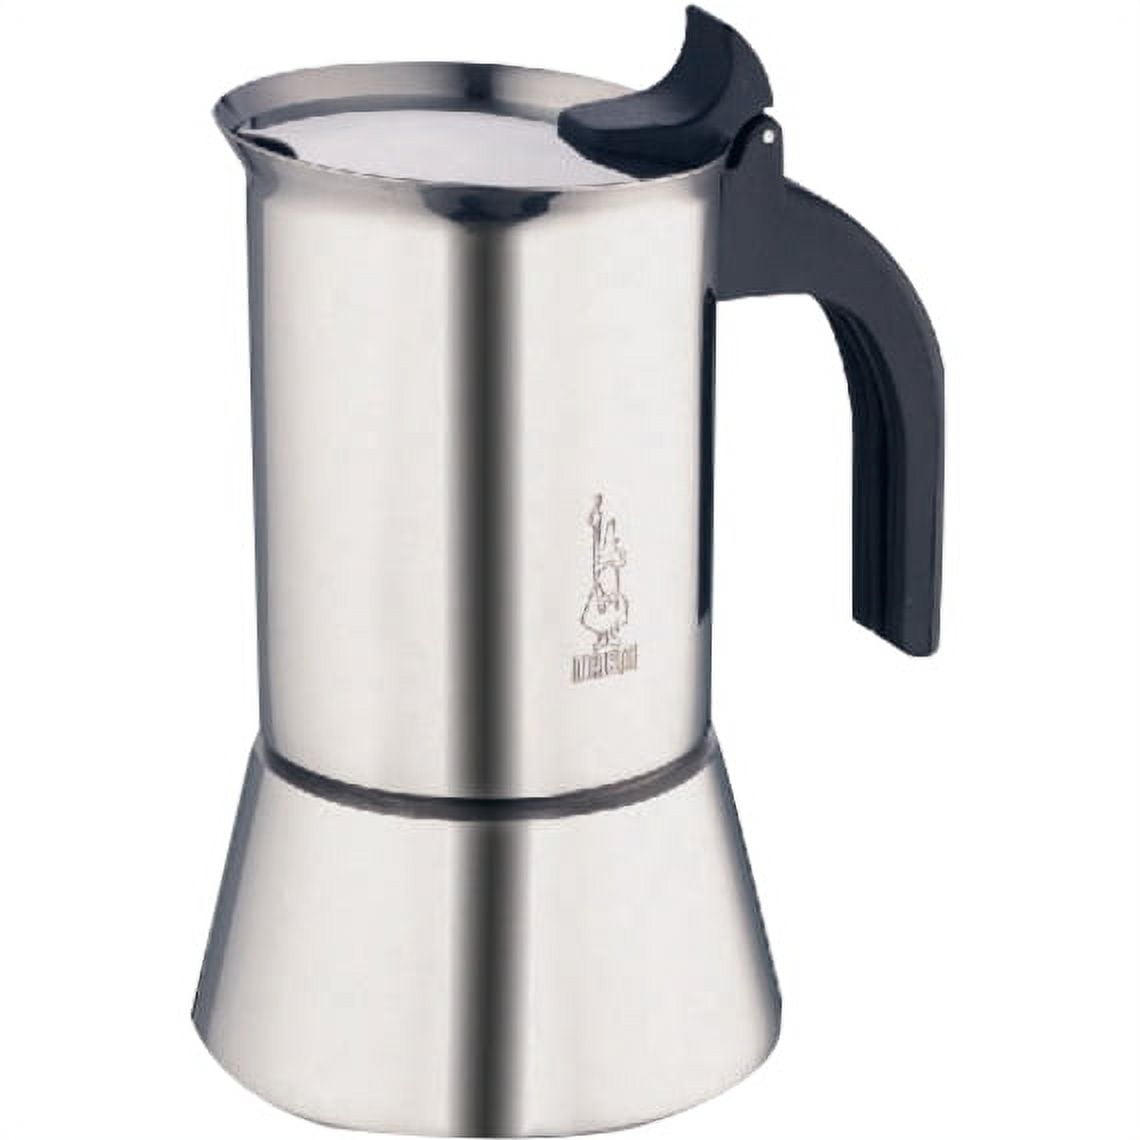 Bialetti Venus Espresso Coffee Maker - 6 Cups Coffee Maker For Sale Online  - Coffee Accessories Ireland - Tea and Coffee